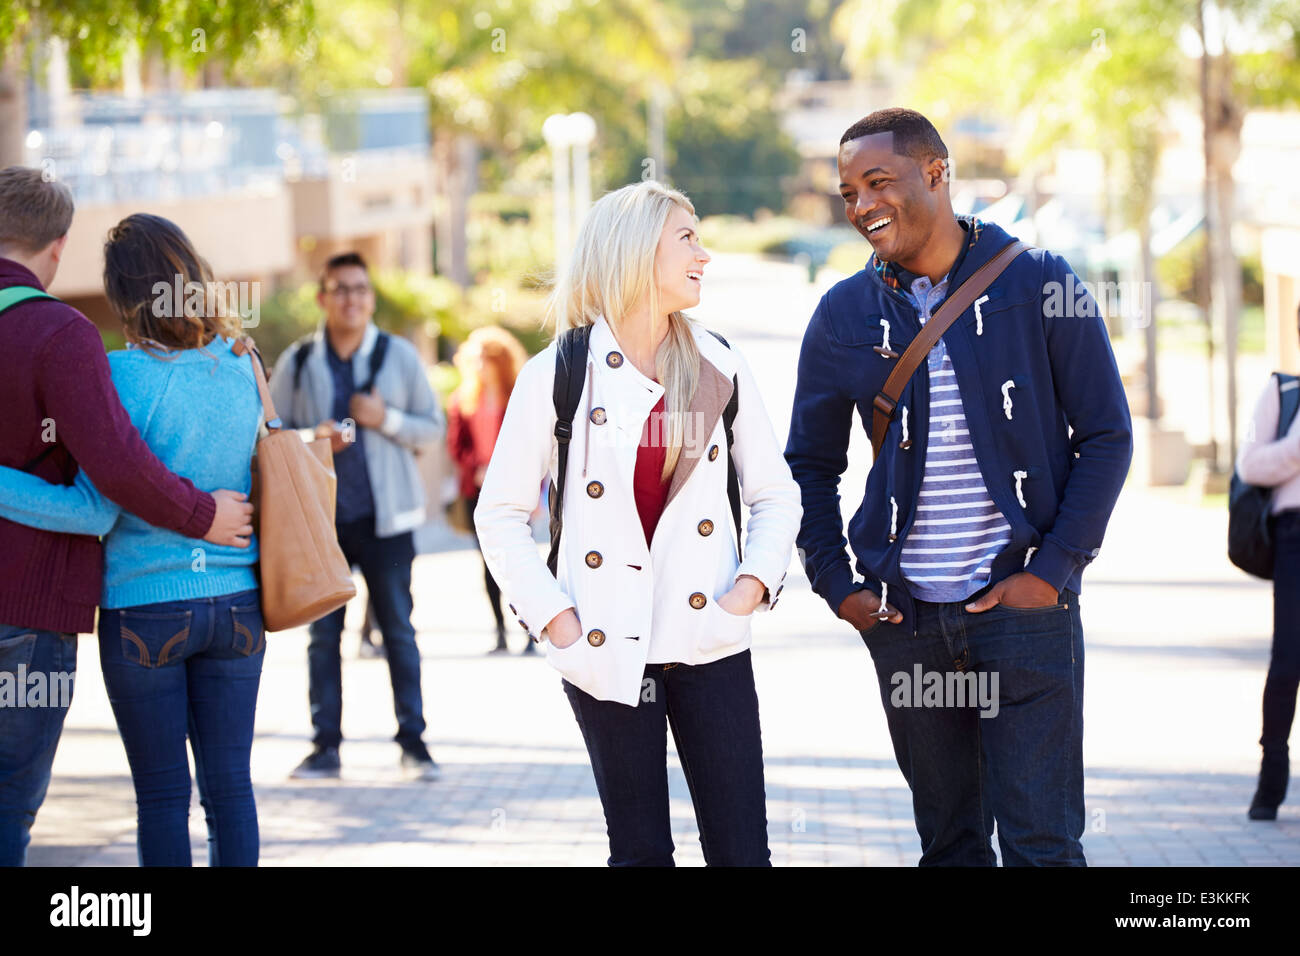 Students Walking Outdoors On University Campus Stock Photo